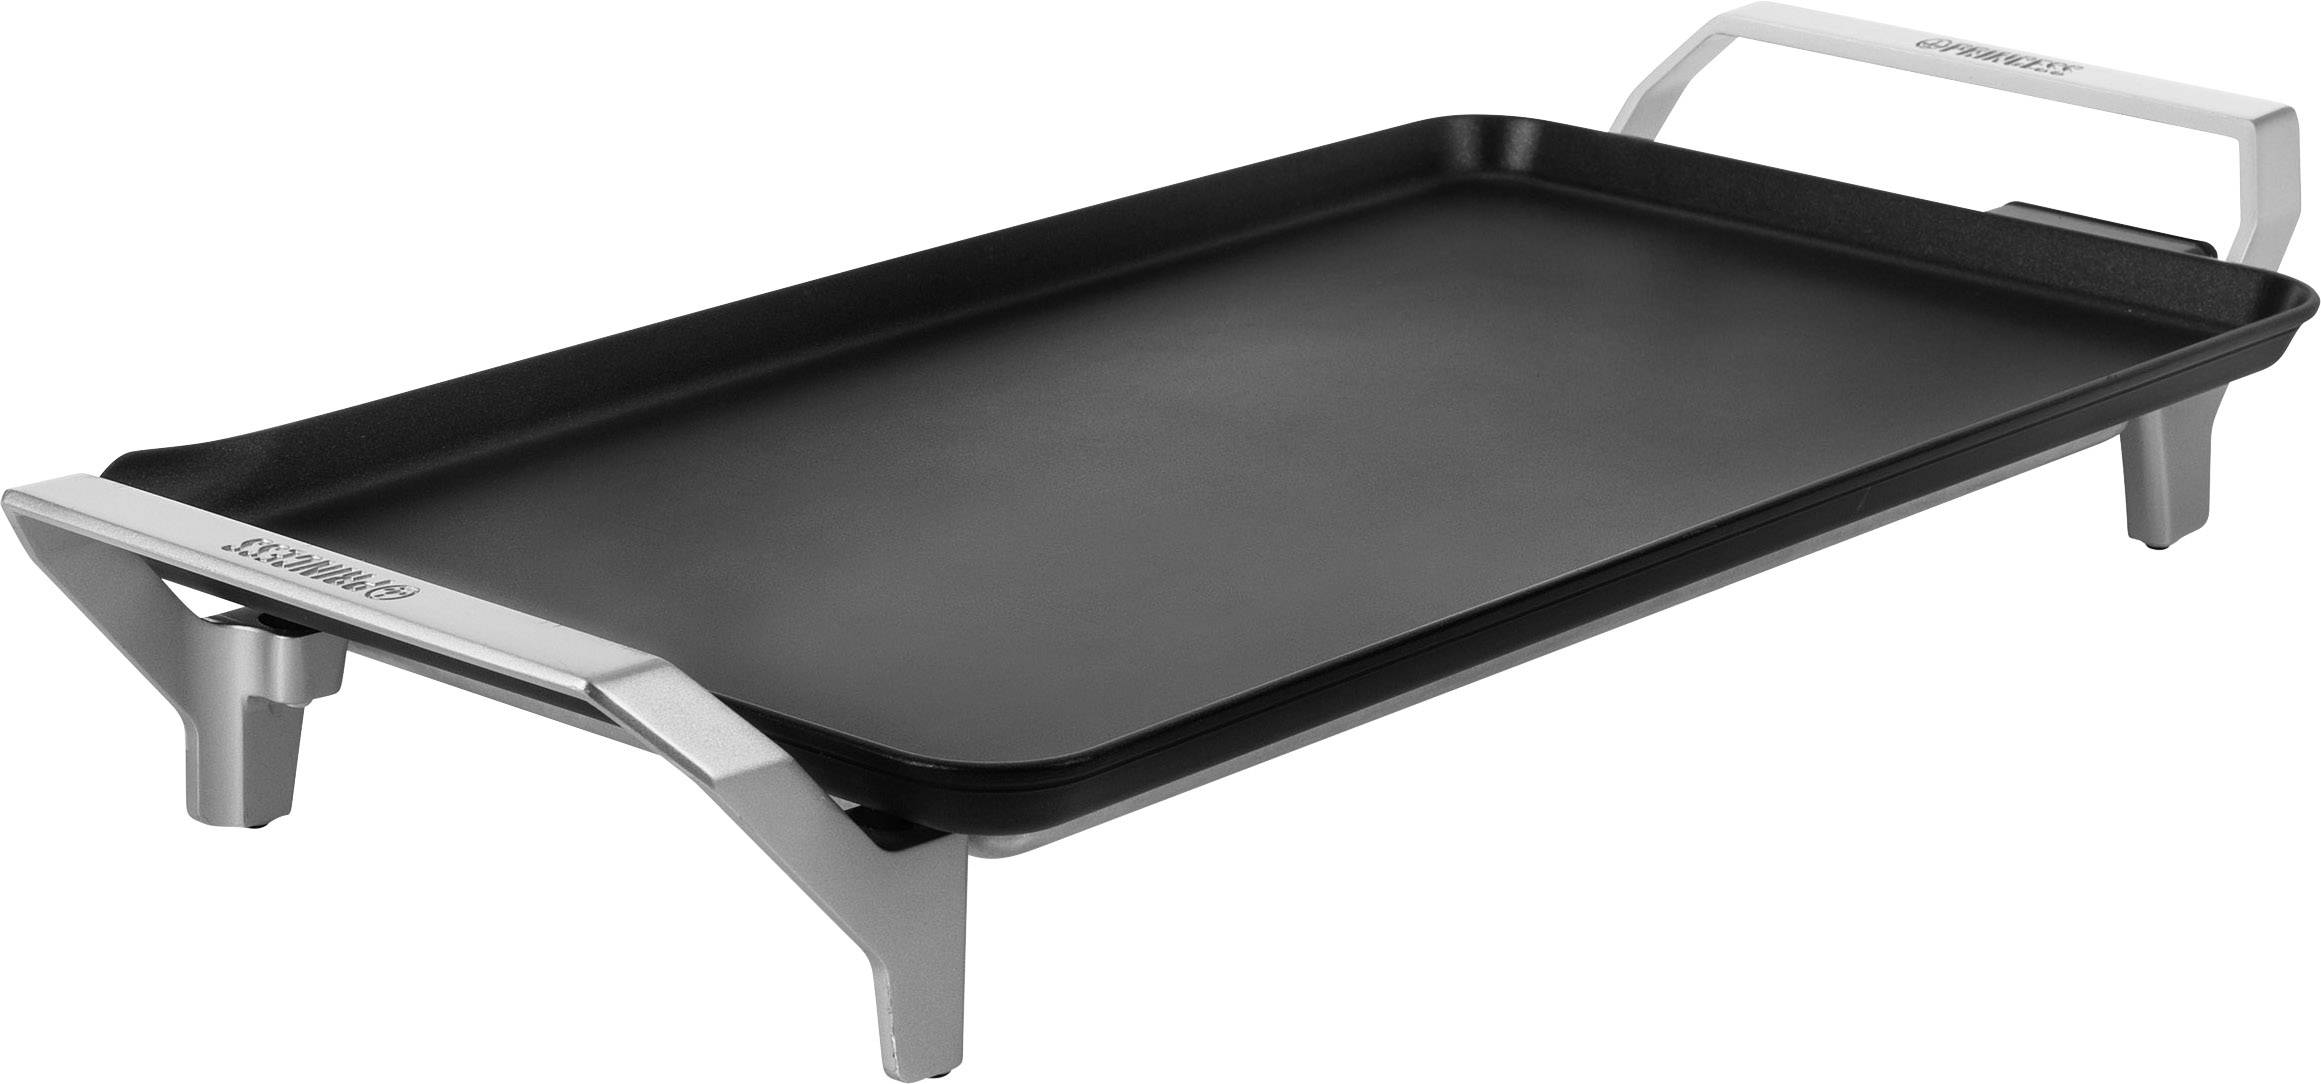 Princess Table Chef Premium XL Electric Tepannyaki table grill with manual settings Silver (matt), Black | Conrad.com